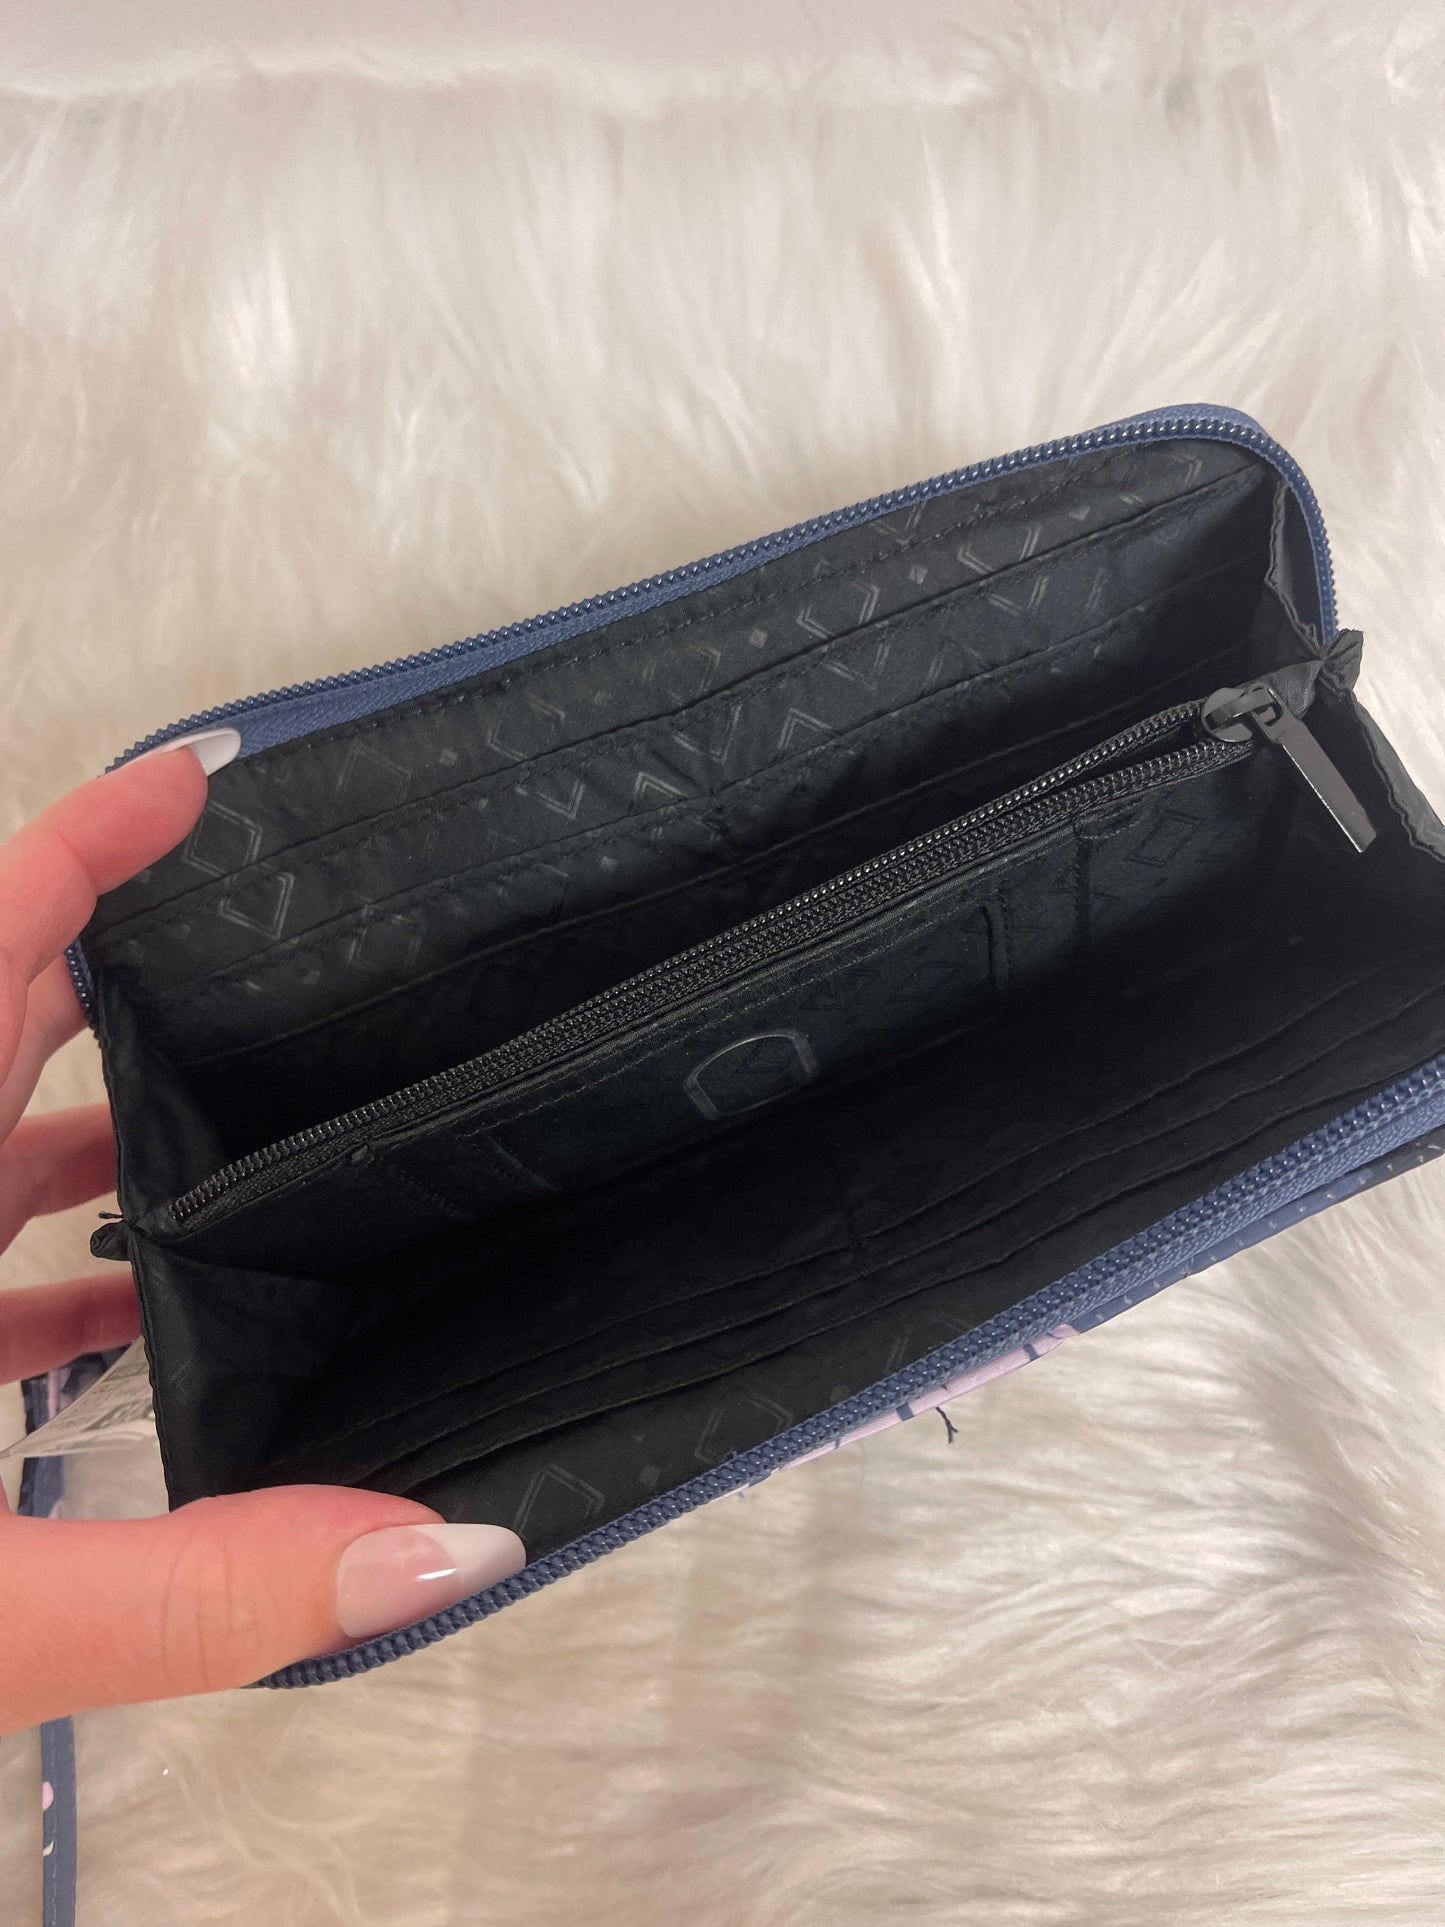 Wallet By Vera Bradley  Size: Medium